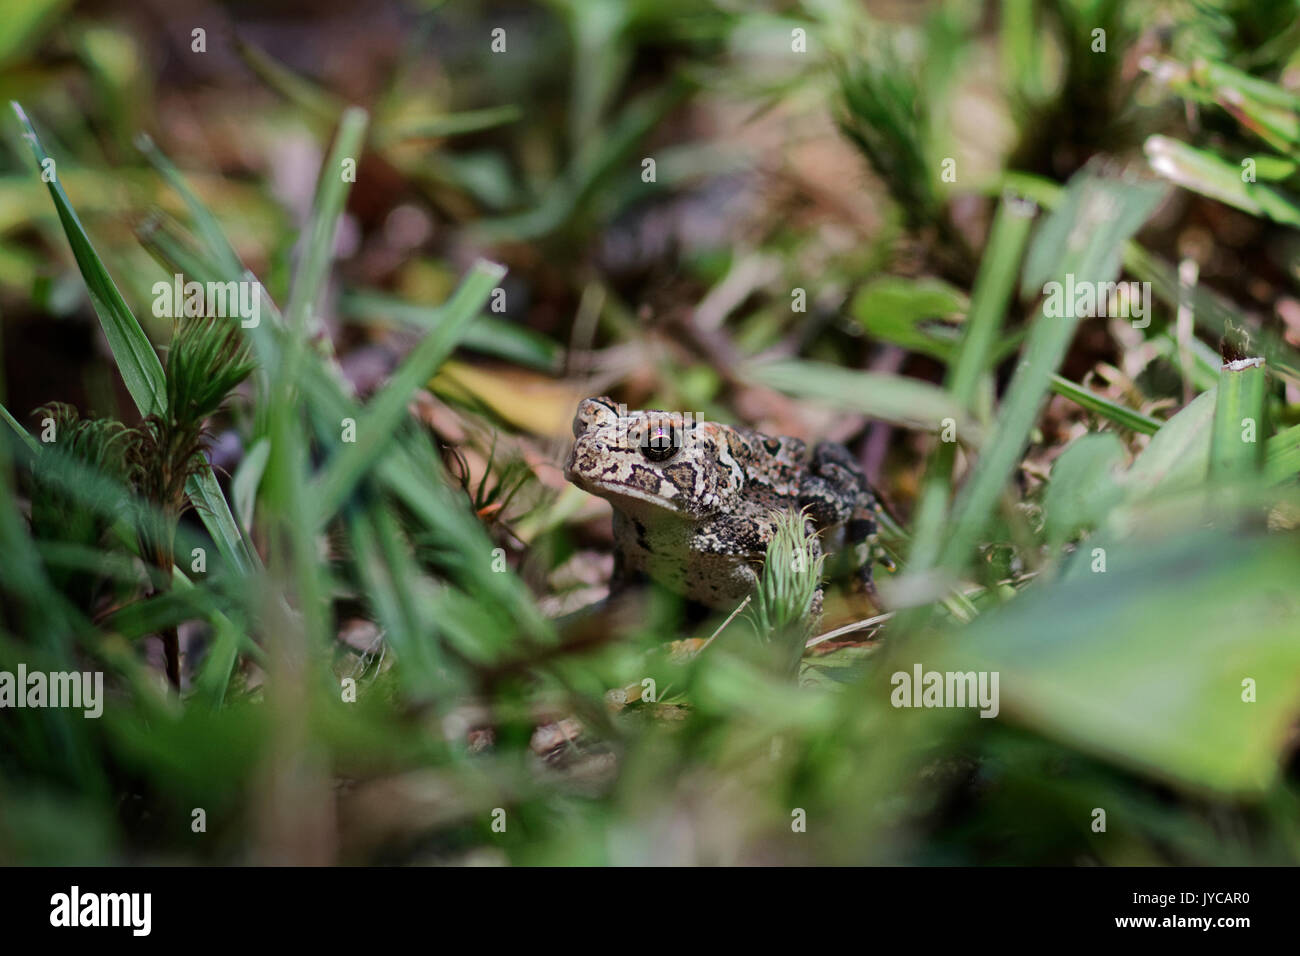 Rana marrone nascondere in erba Foto Stock